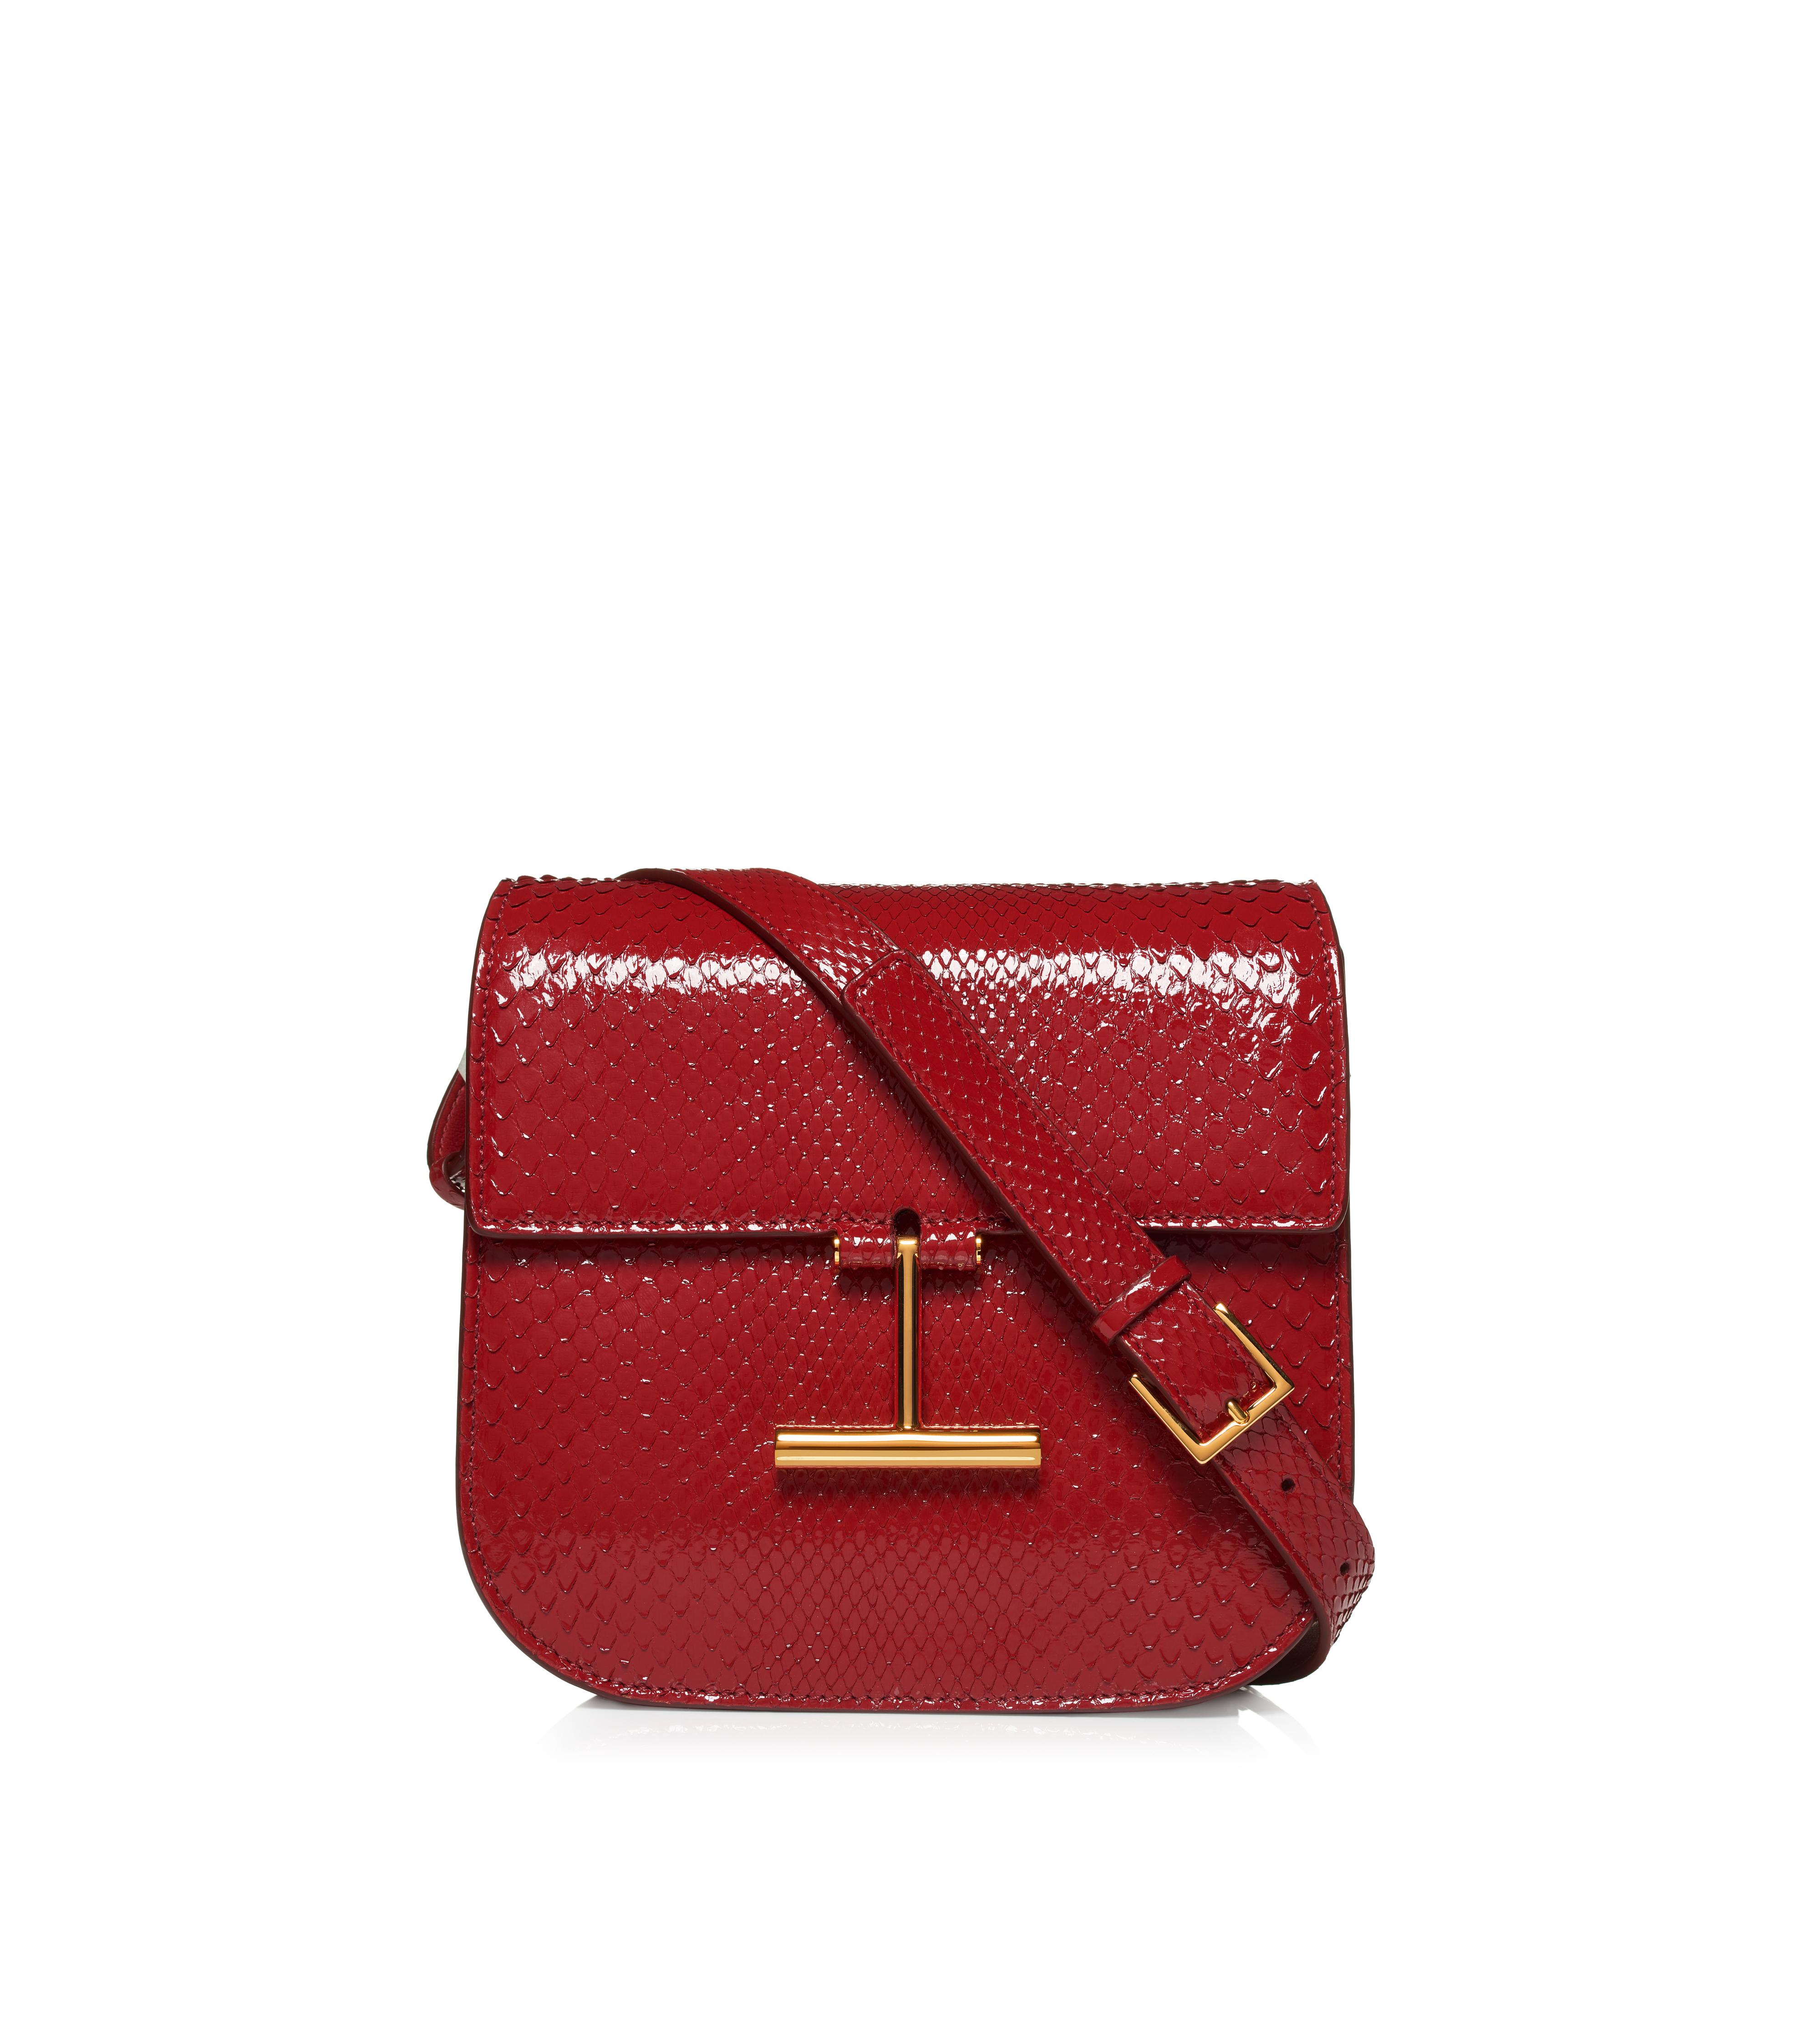 Cross Body Bags - Women's Handbags | TomFord.com